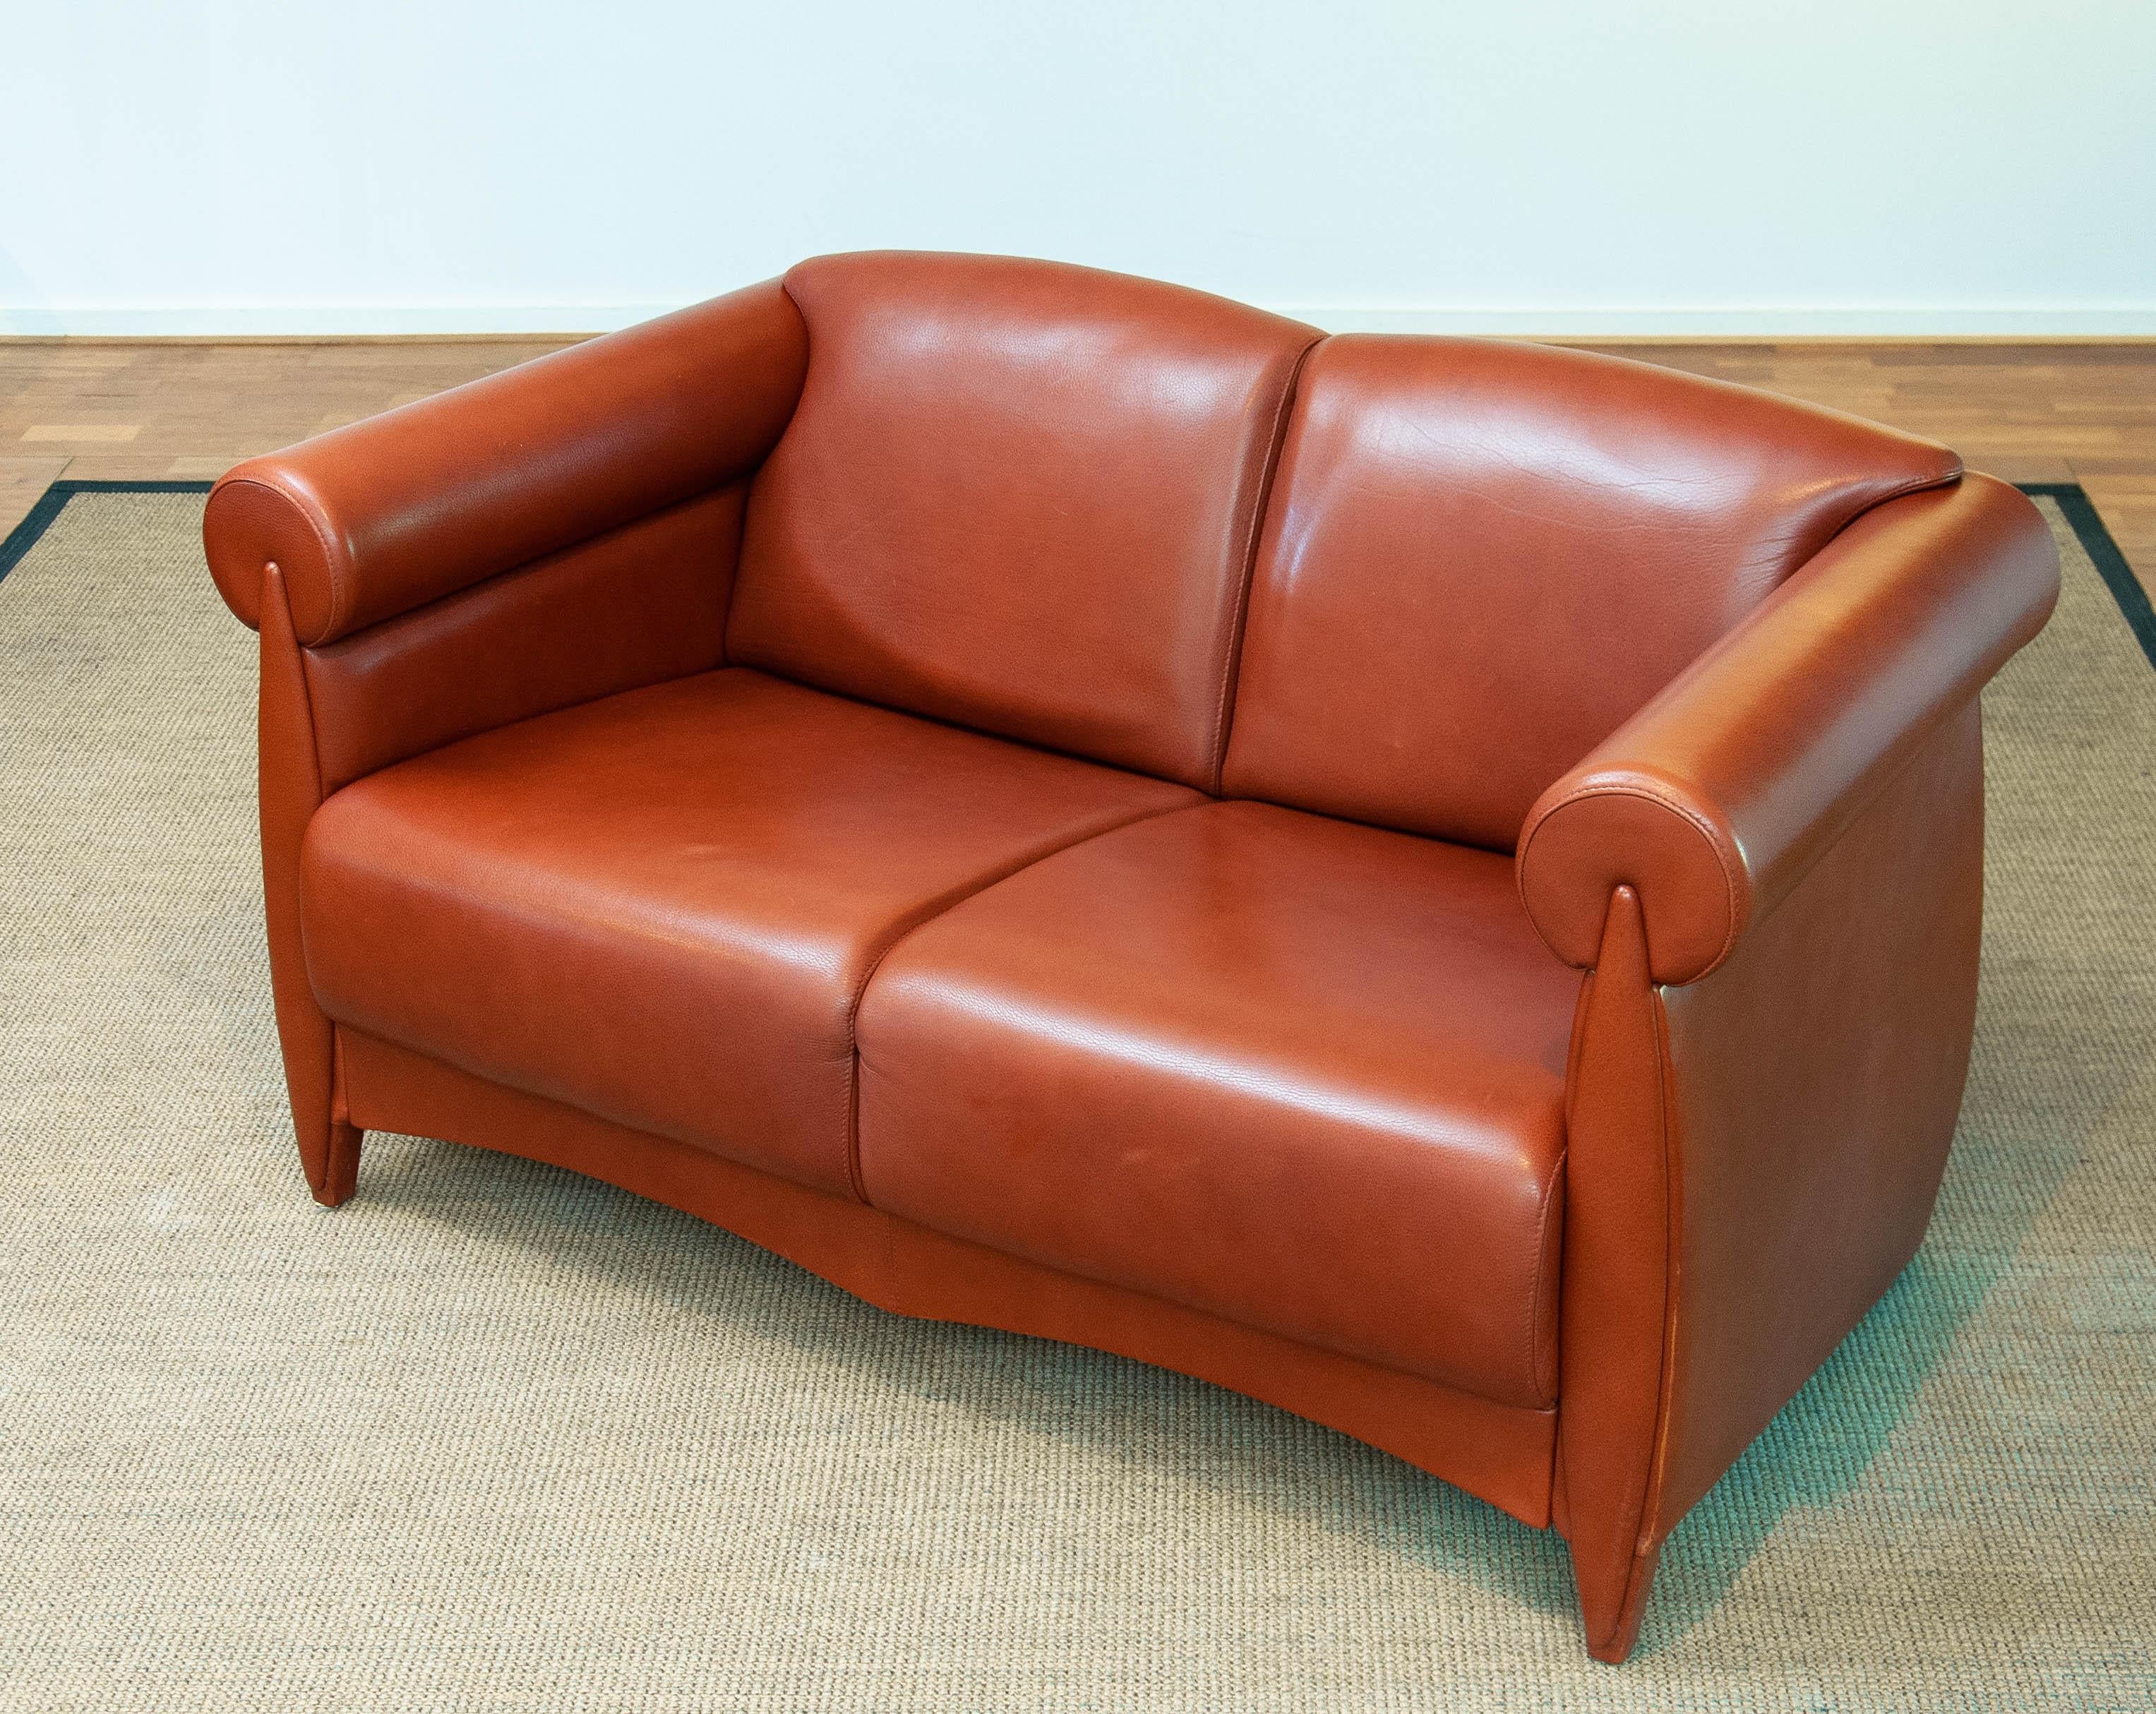 rfl sofa price